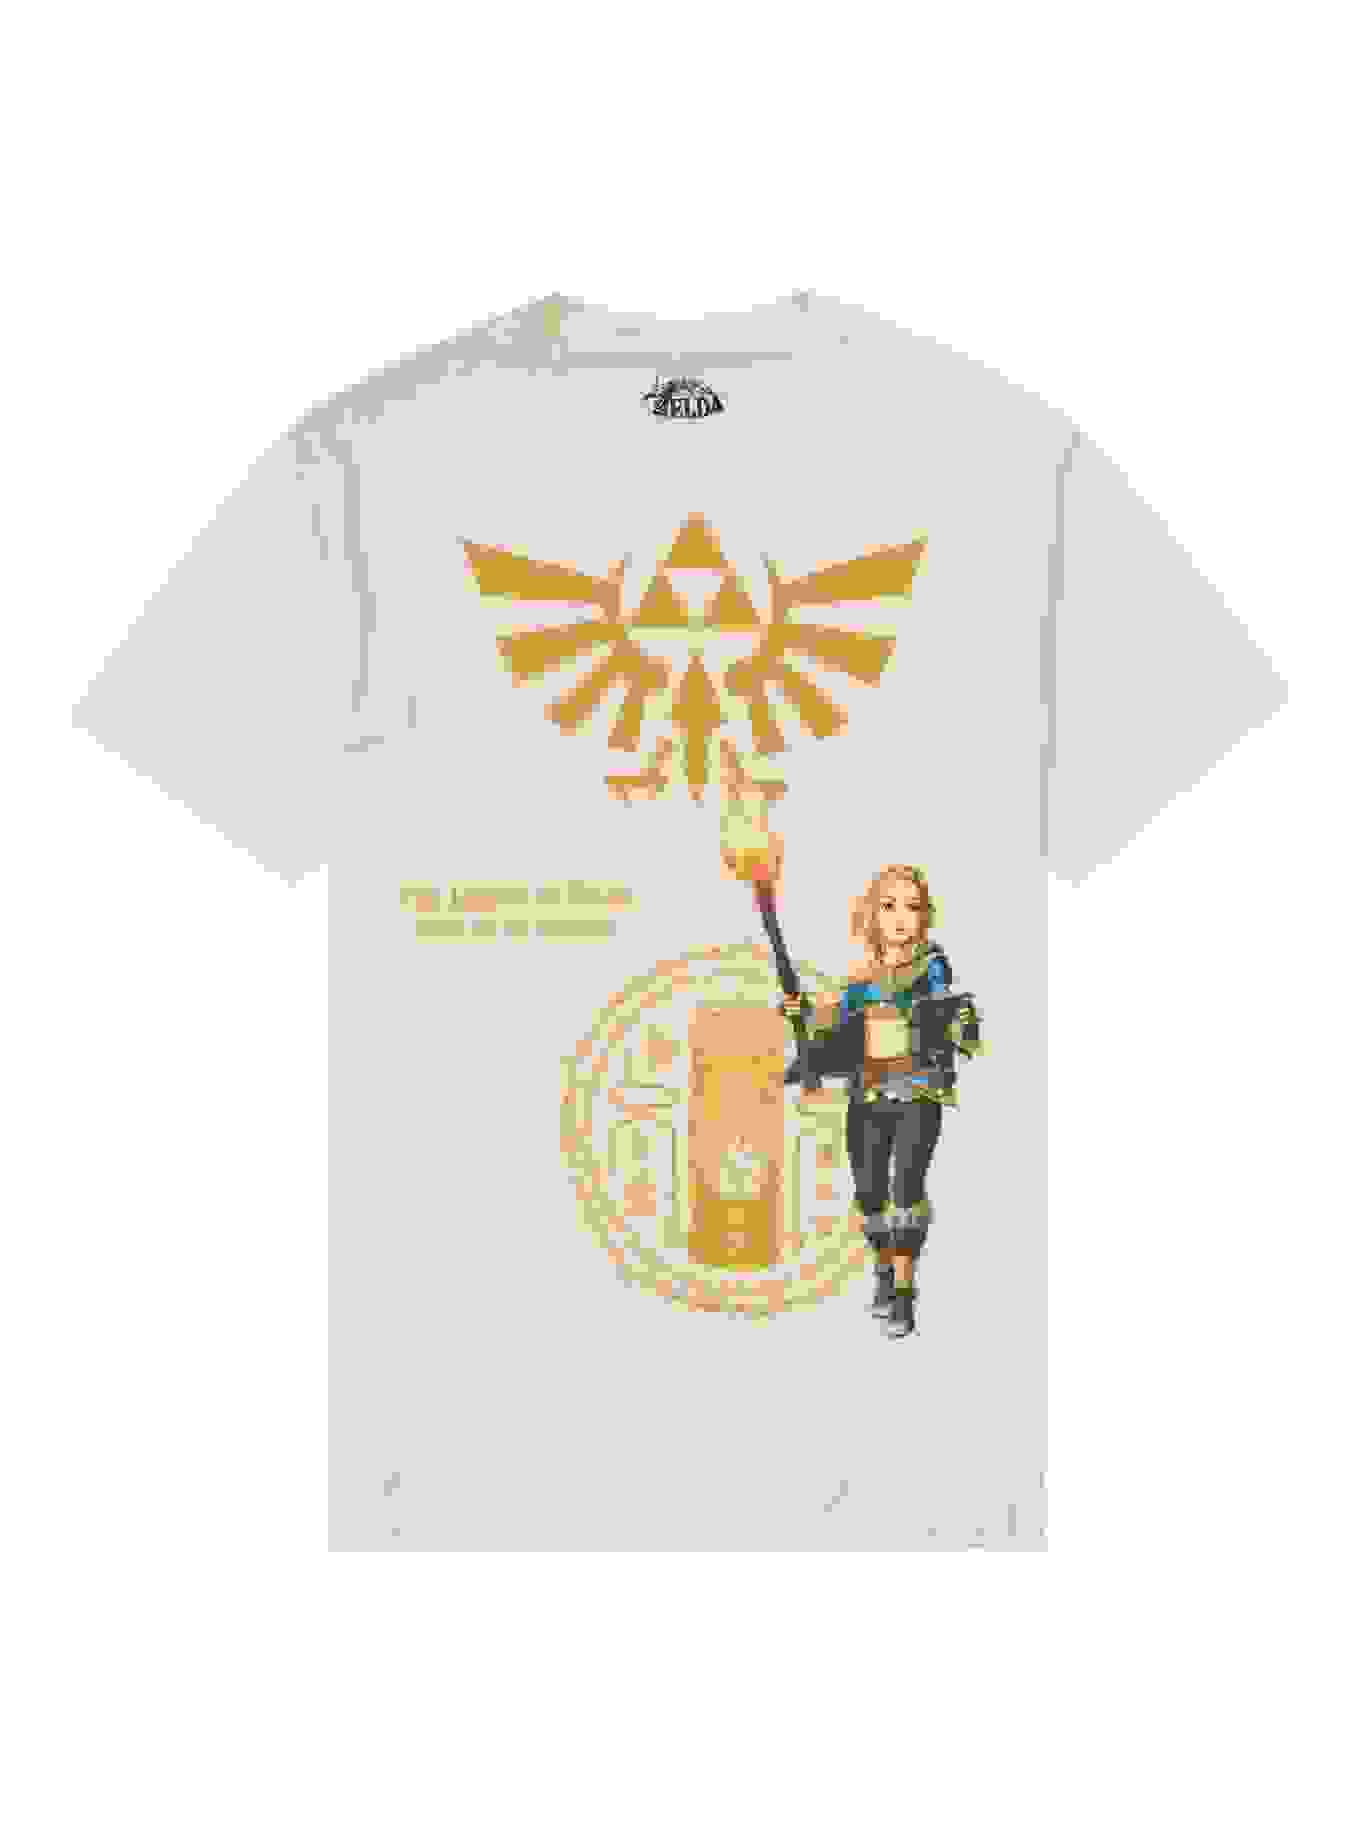 OFFICIAL Legend of Zelda Shirts & Merchandise